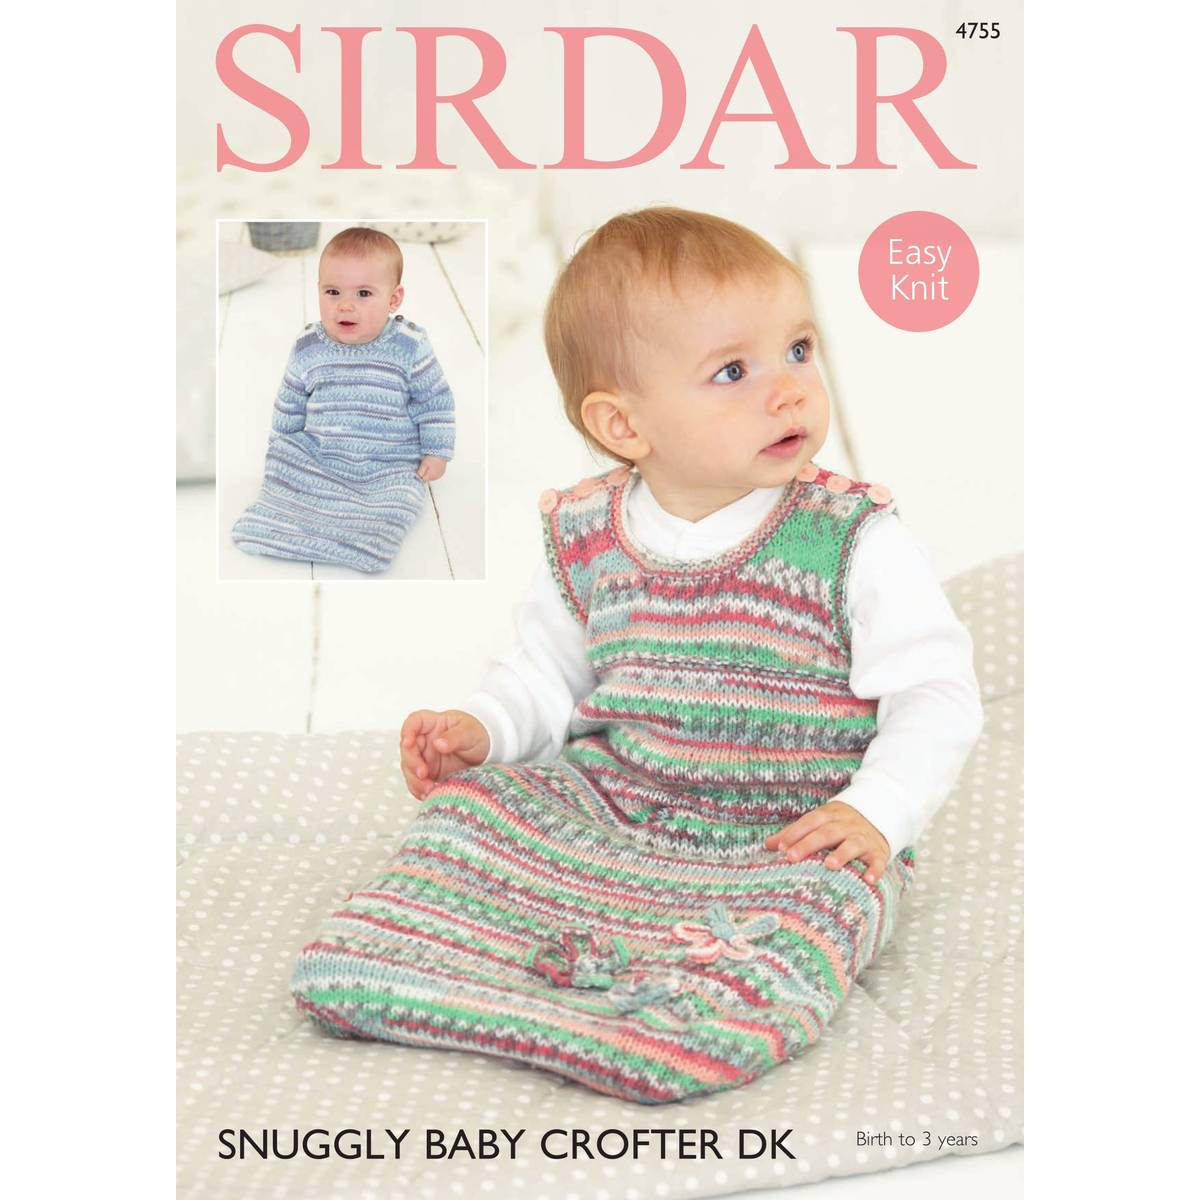 Sirdar Snuggly Knitting Patterns Sirdar Snuggly Ba Crofter Dk Sleeping Bags Digital Pattern 4755